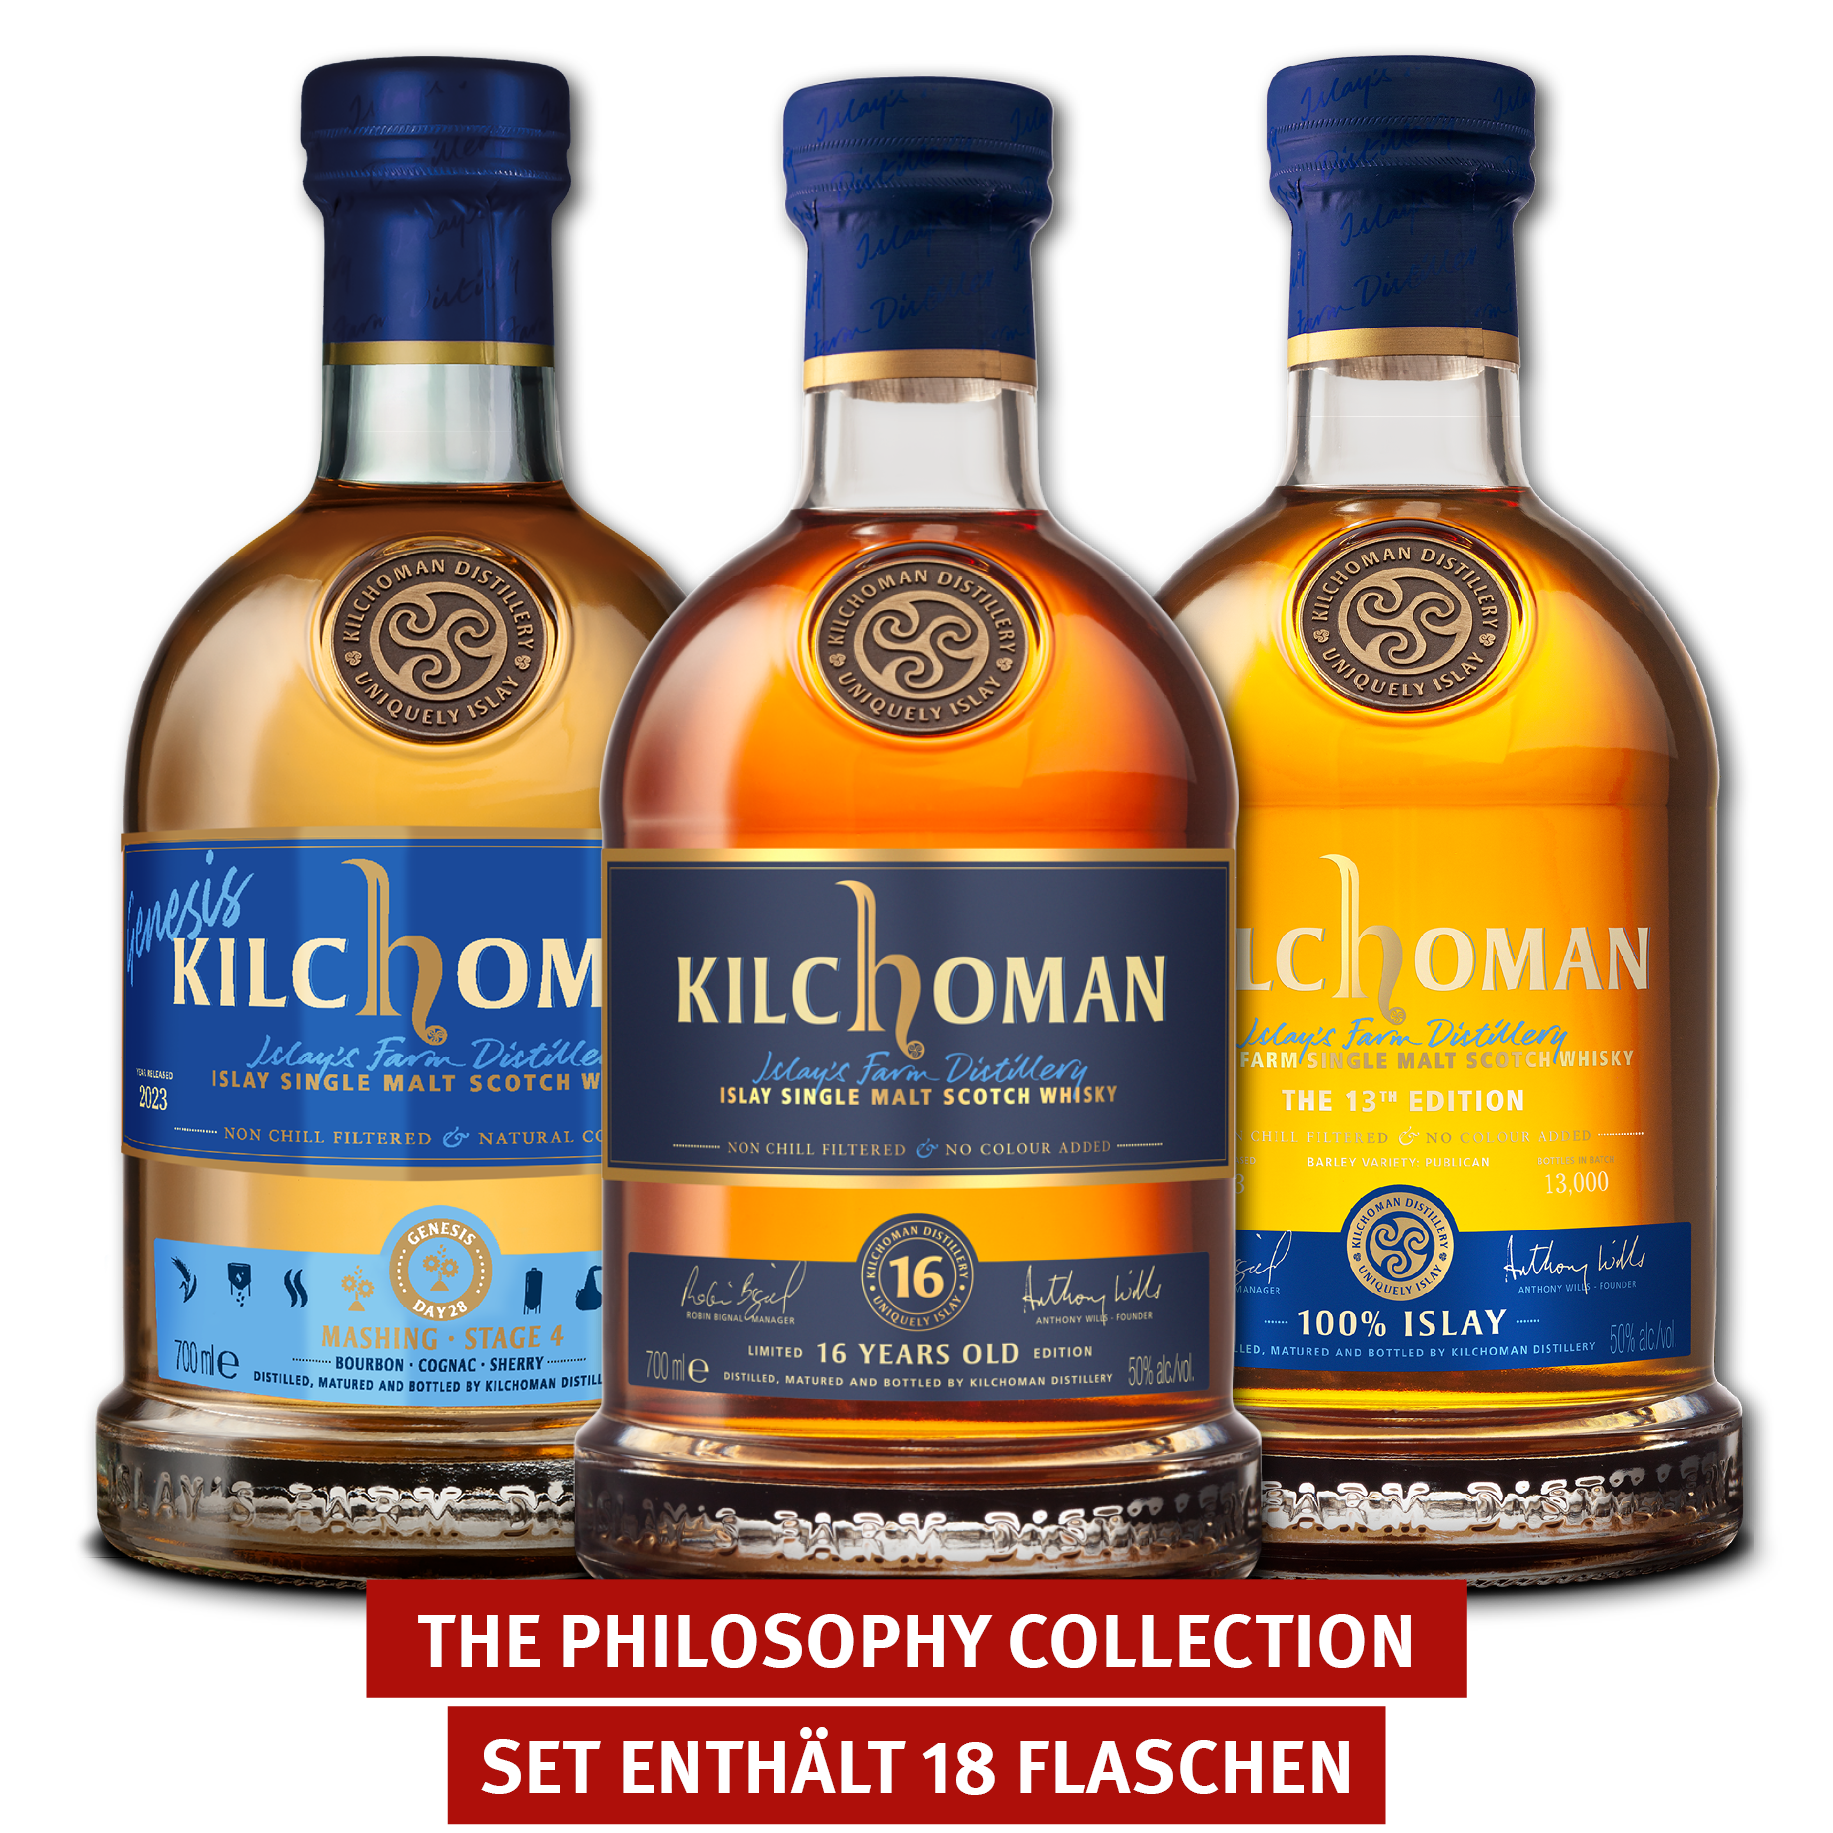 Kilchoman's Philosophy Collection